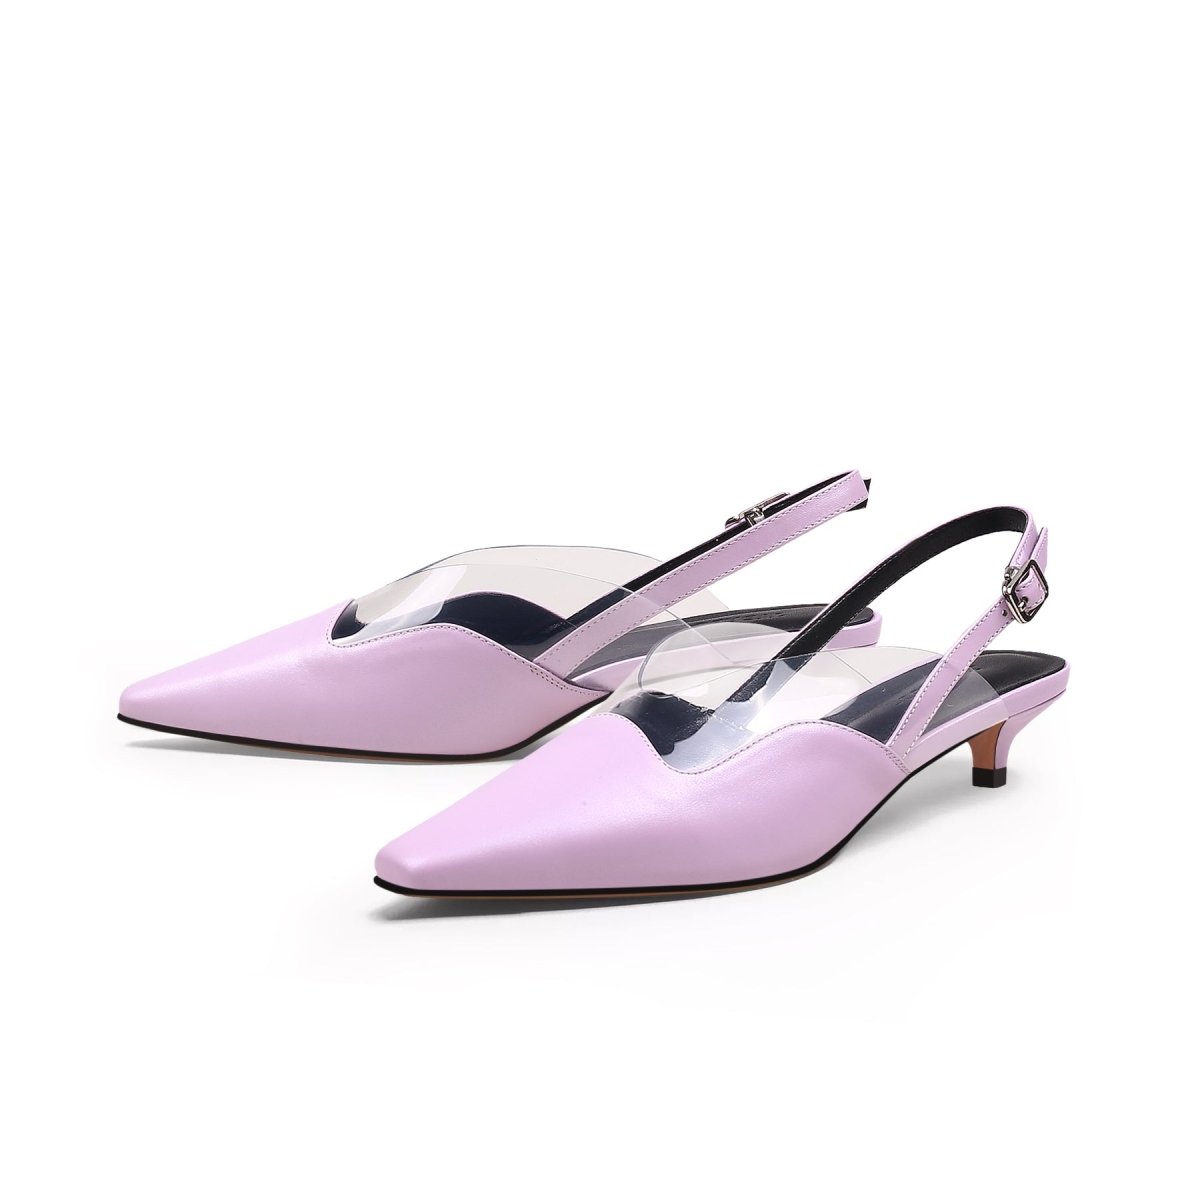 Floral Lavender Sandals - 0cm